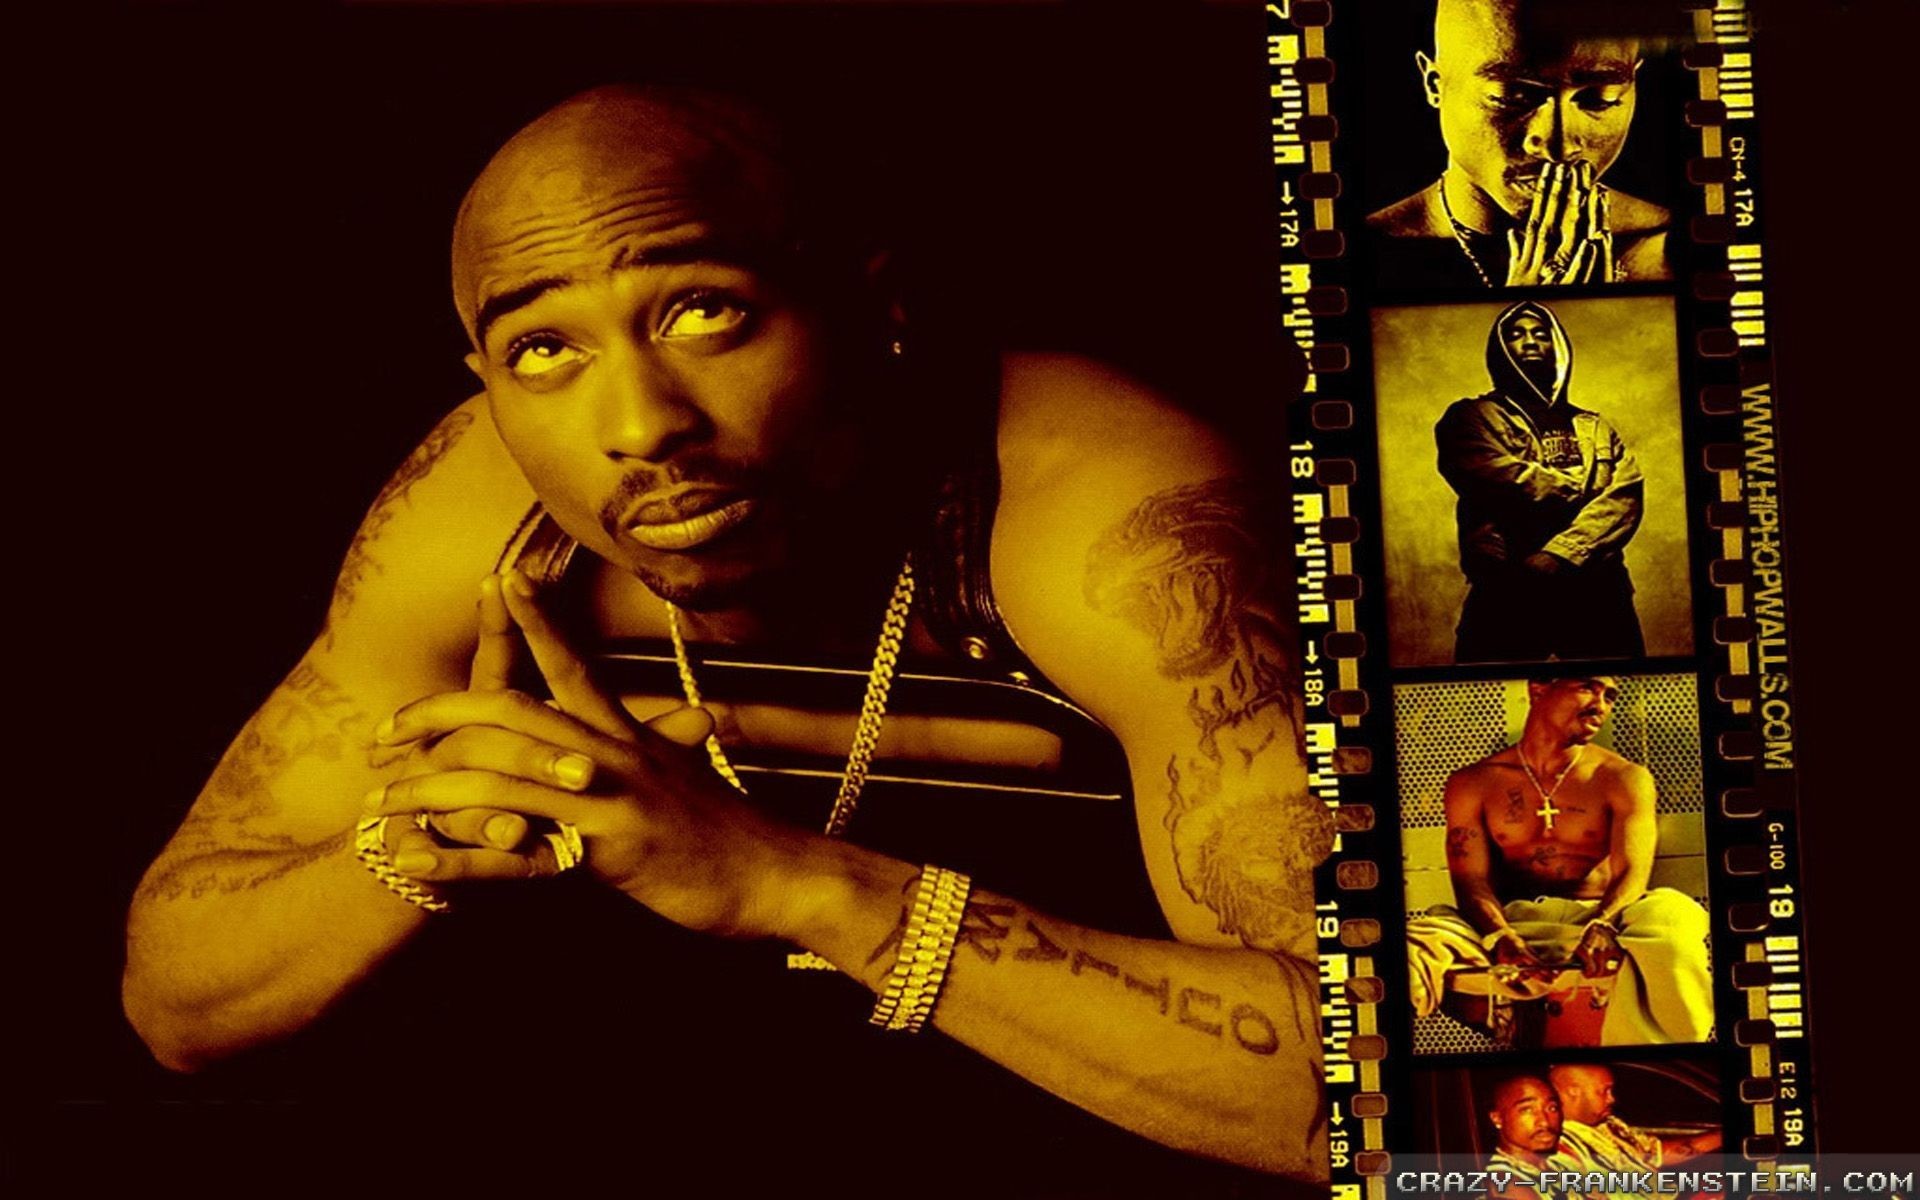 Бесплатные песни 2pac. Тупак Шакур фото. Тупак Амару Шакур. Тупак 1996. Tupac Shakur 1996.